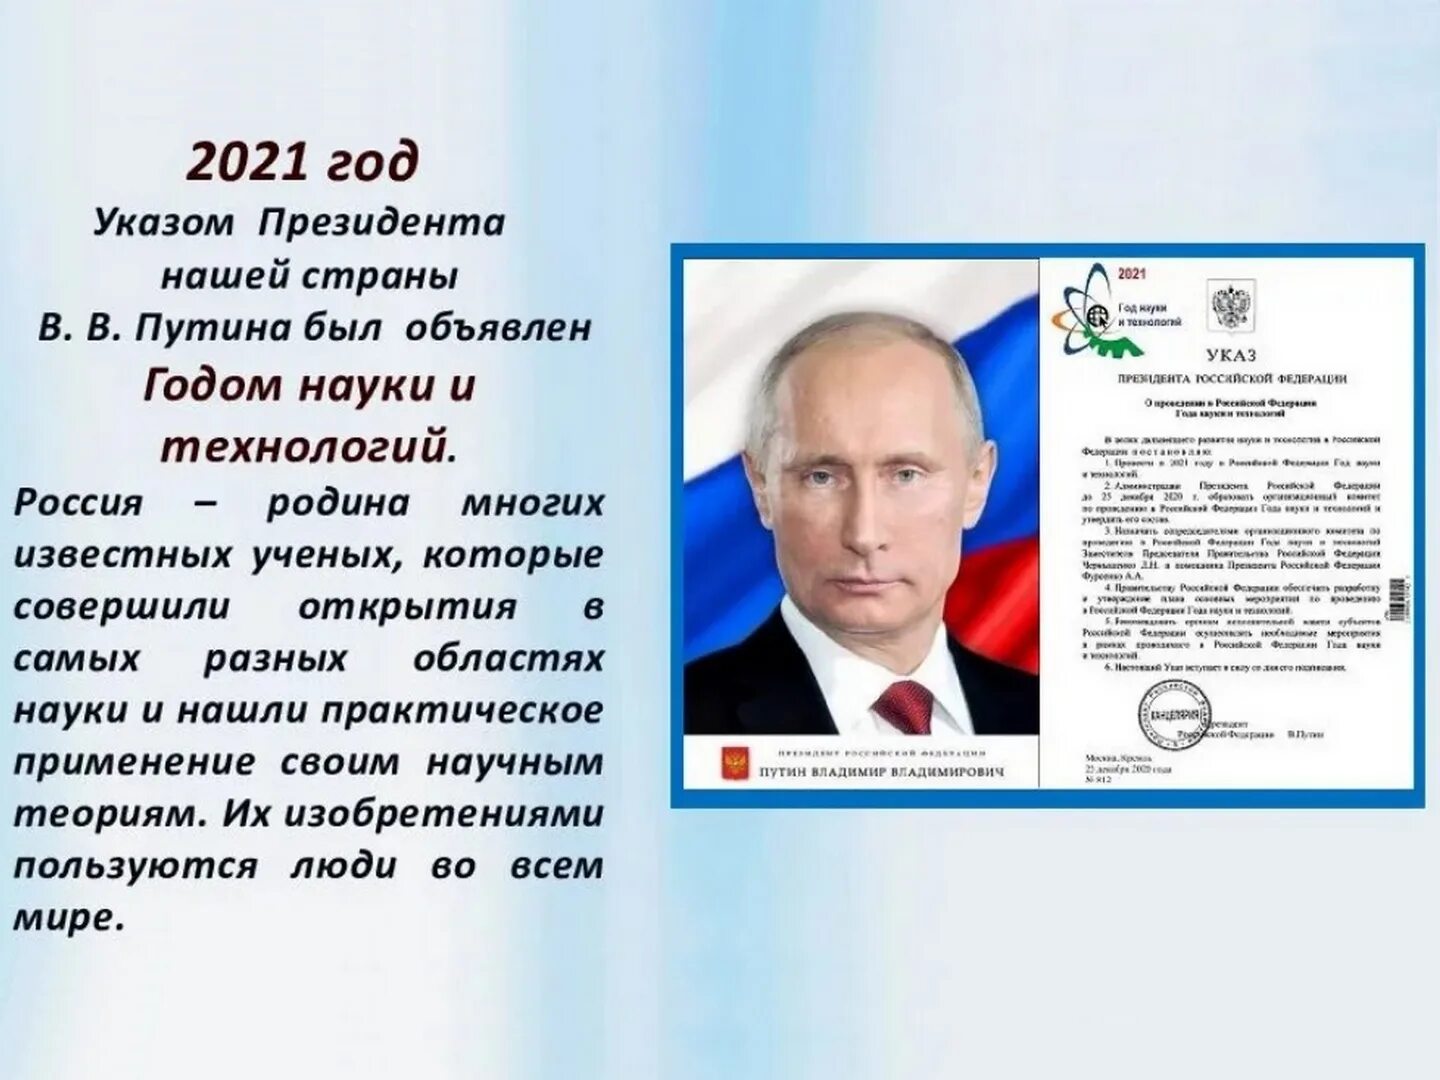 2021 Год год науки и технологий. 2021 Год в России объявлен годом указ президента. 2021 Год в России год науки и технологий год науки.